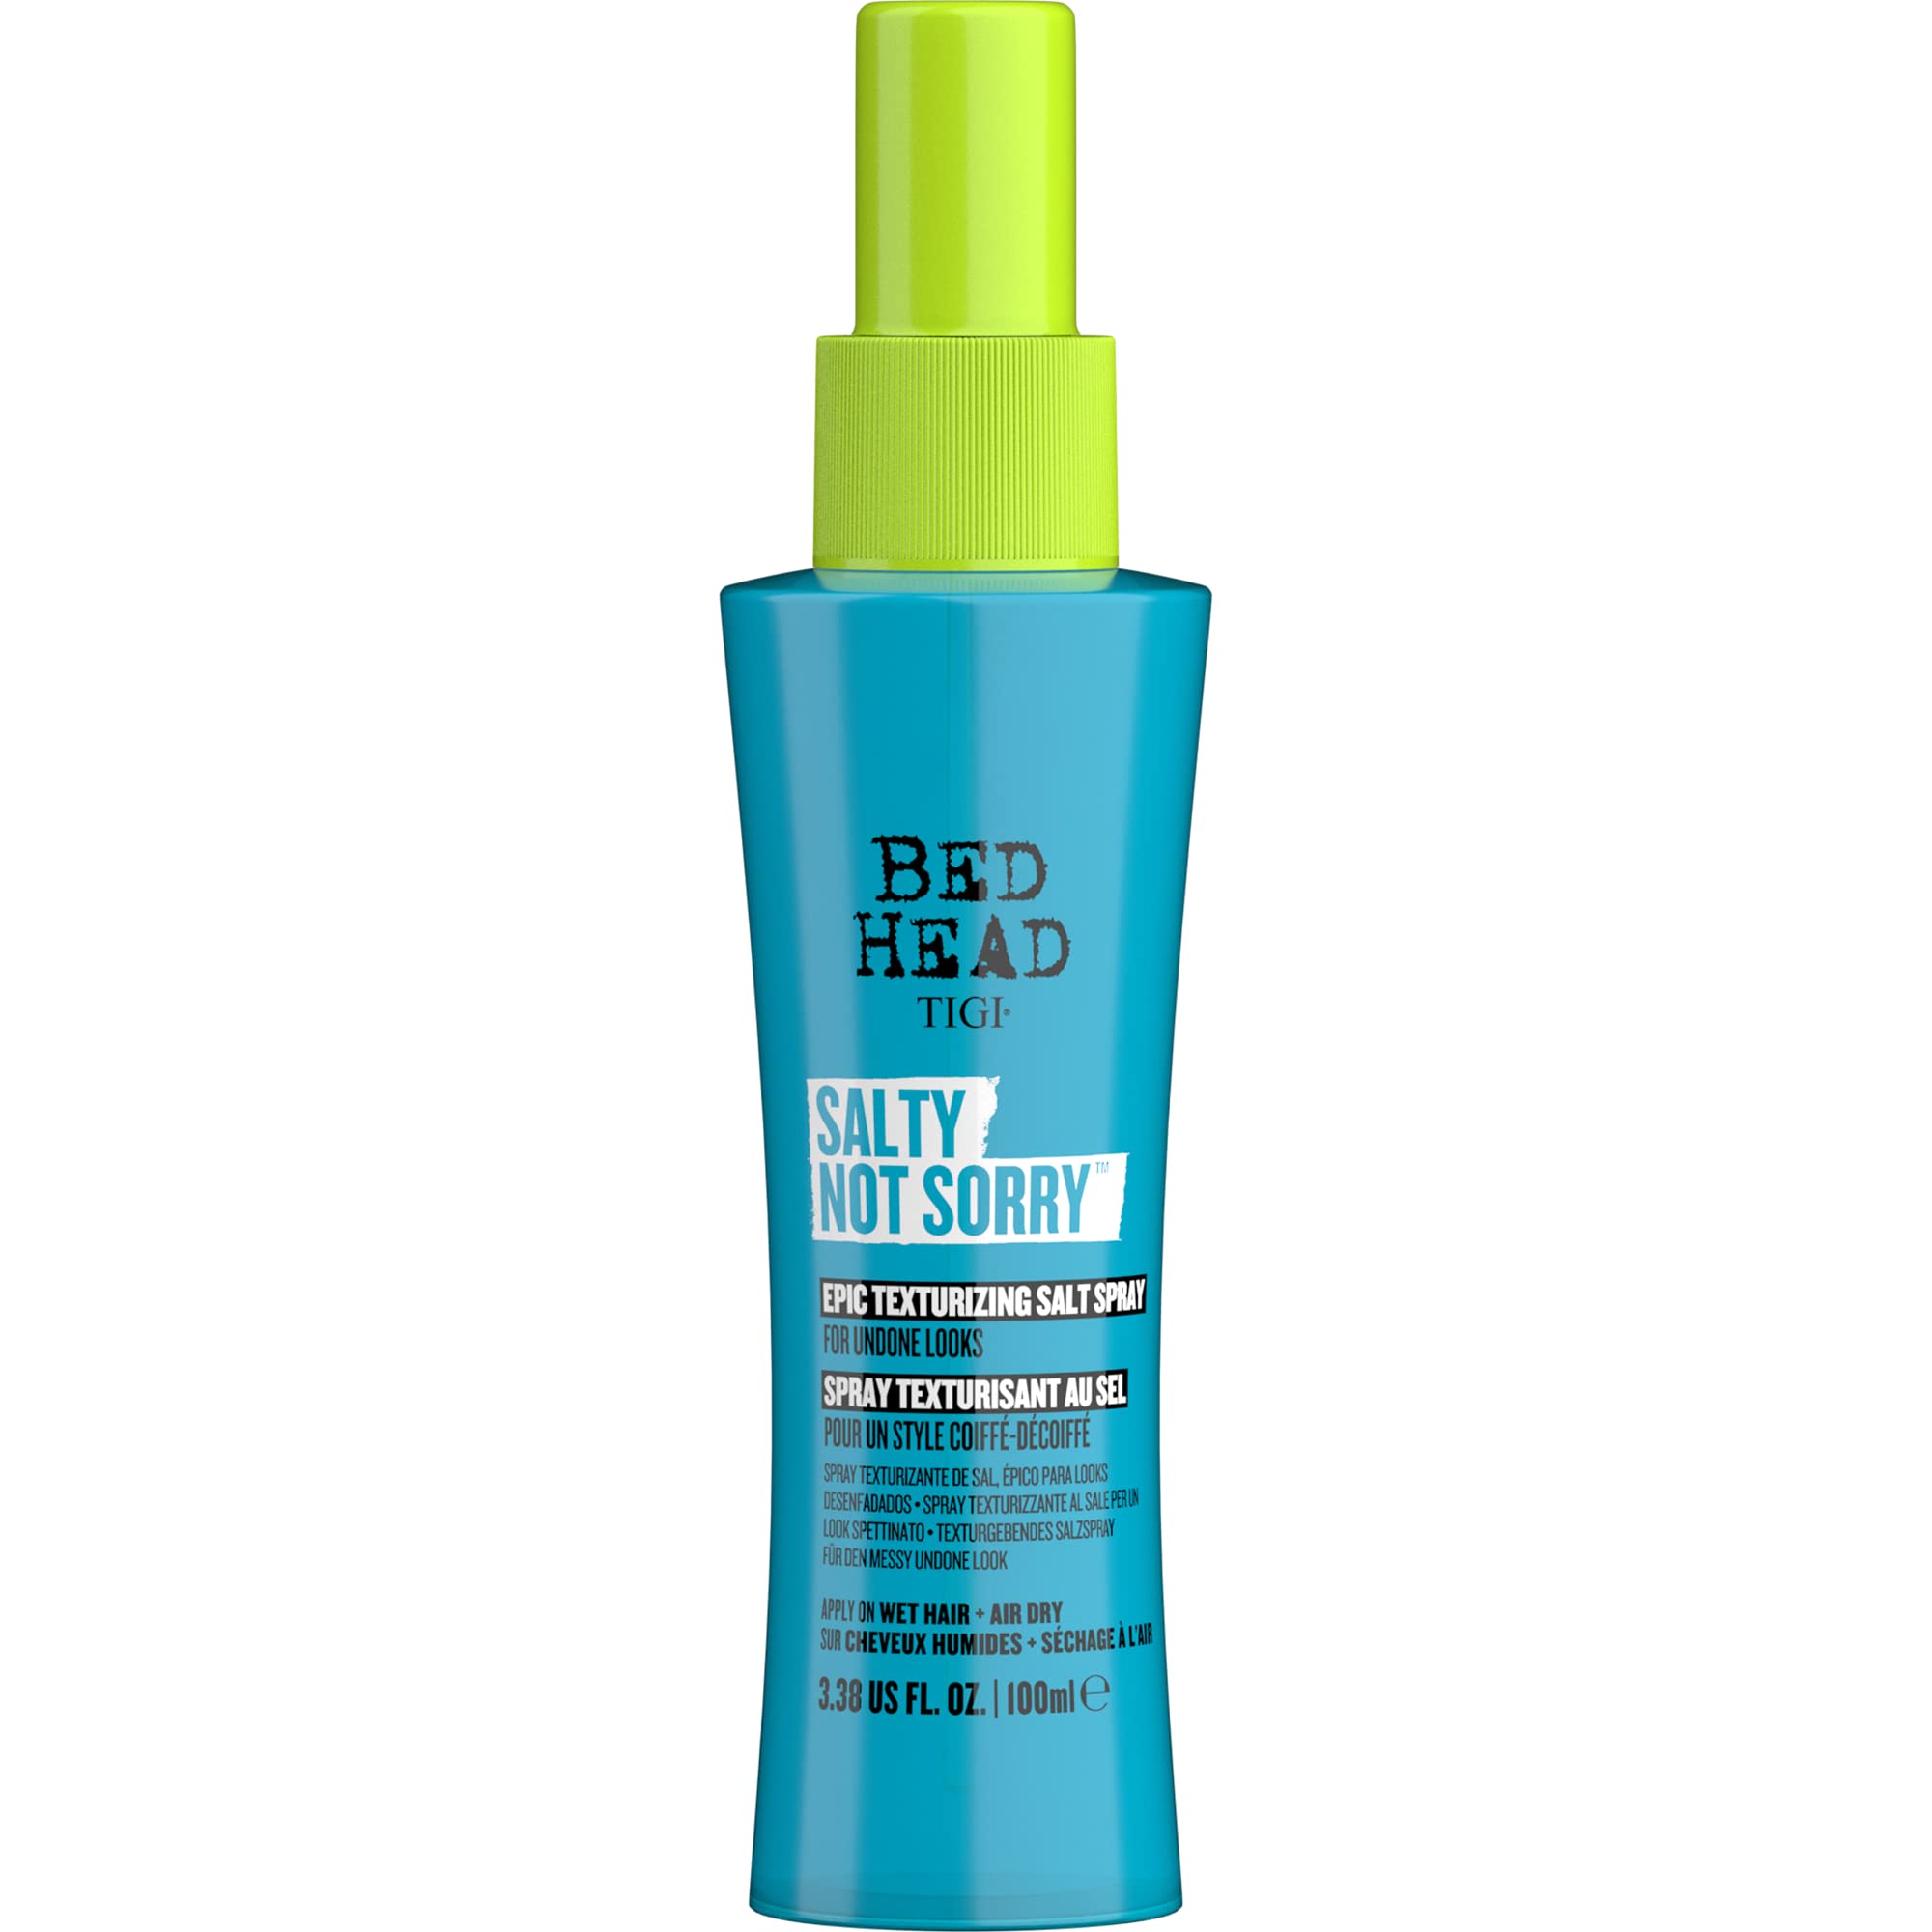 TIGI Bed Head Salty Not Sorry texturizing Salt Spray for Natural Undone Hairstyles 3.38 fl oz